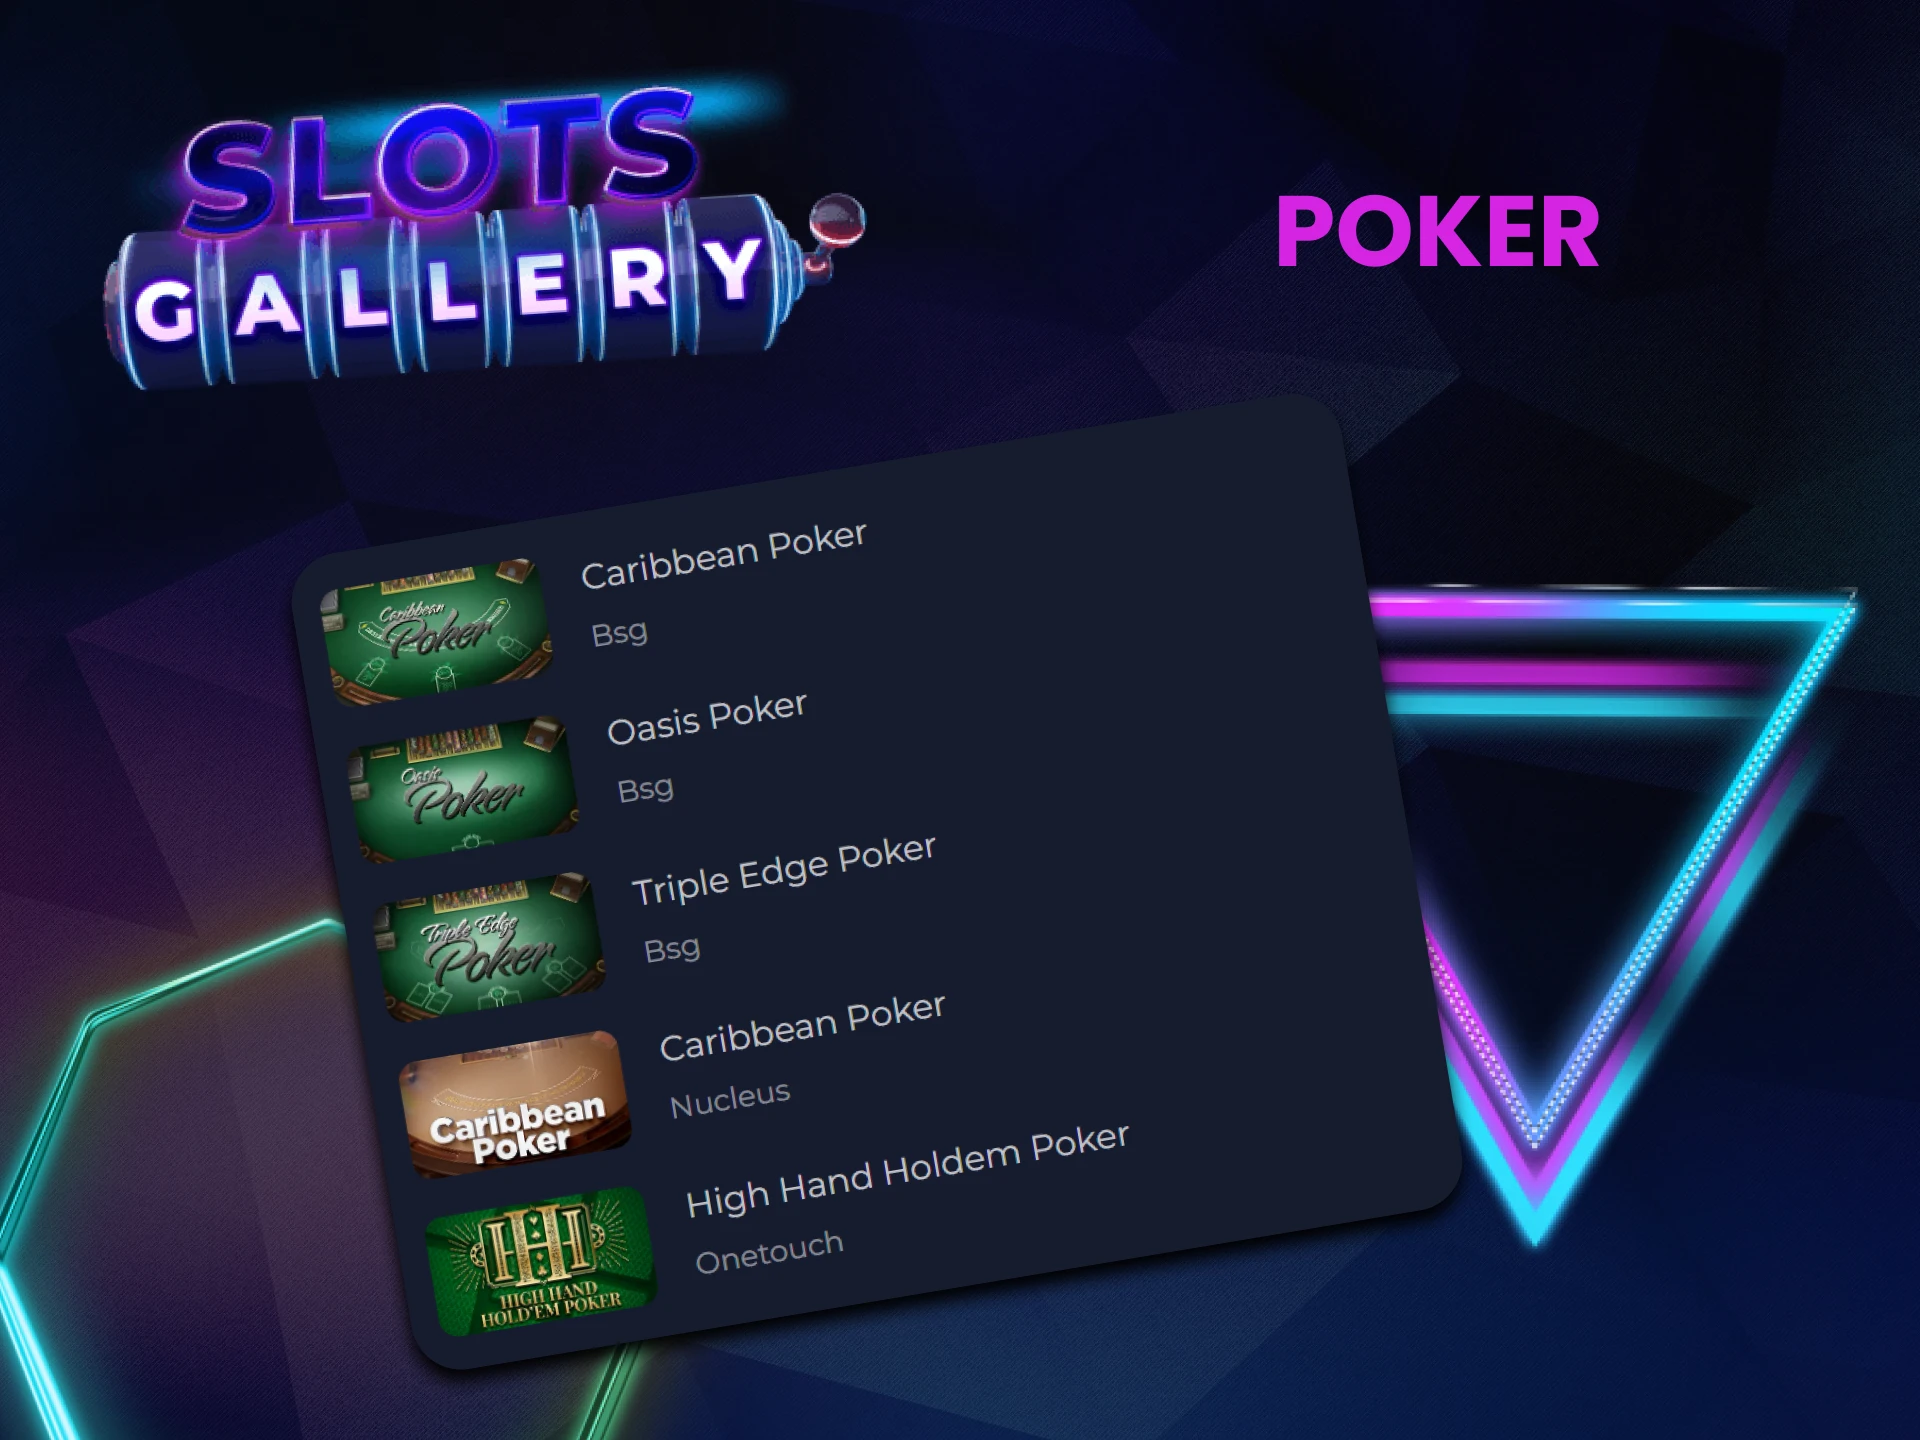 To play at Slots Gallery, choose Poker.